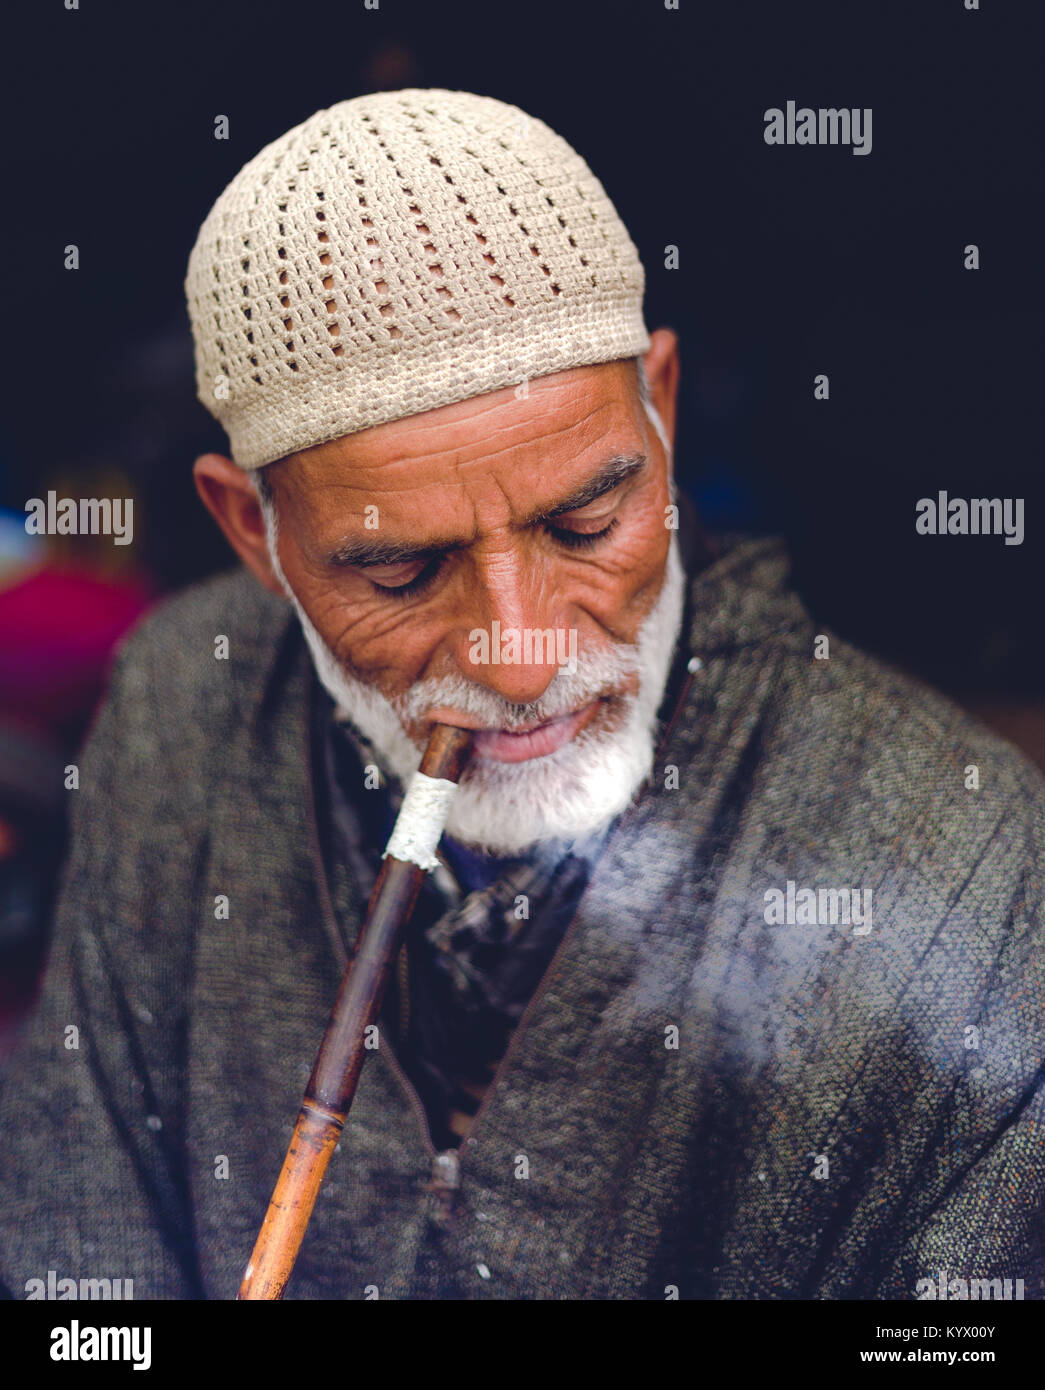 Sonamarg, Jammu & Kashmir - August 11 2017: An Old traditional muslim Kashmiri man smokes Sheesha/Hookah at thajiwas glacier fo recreation. Stock Photo